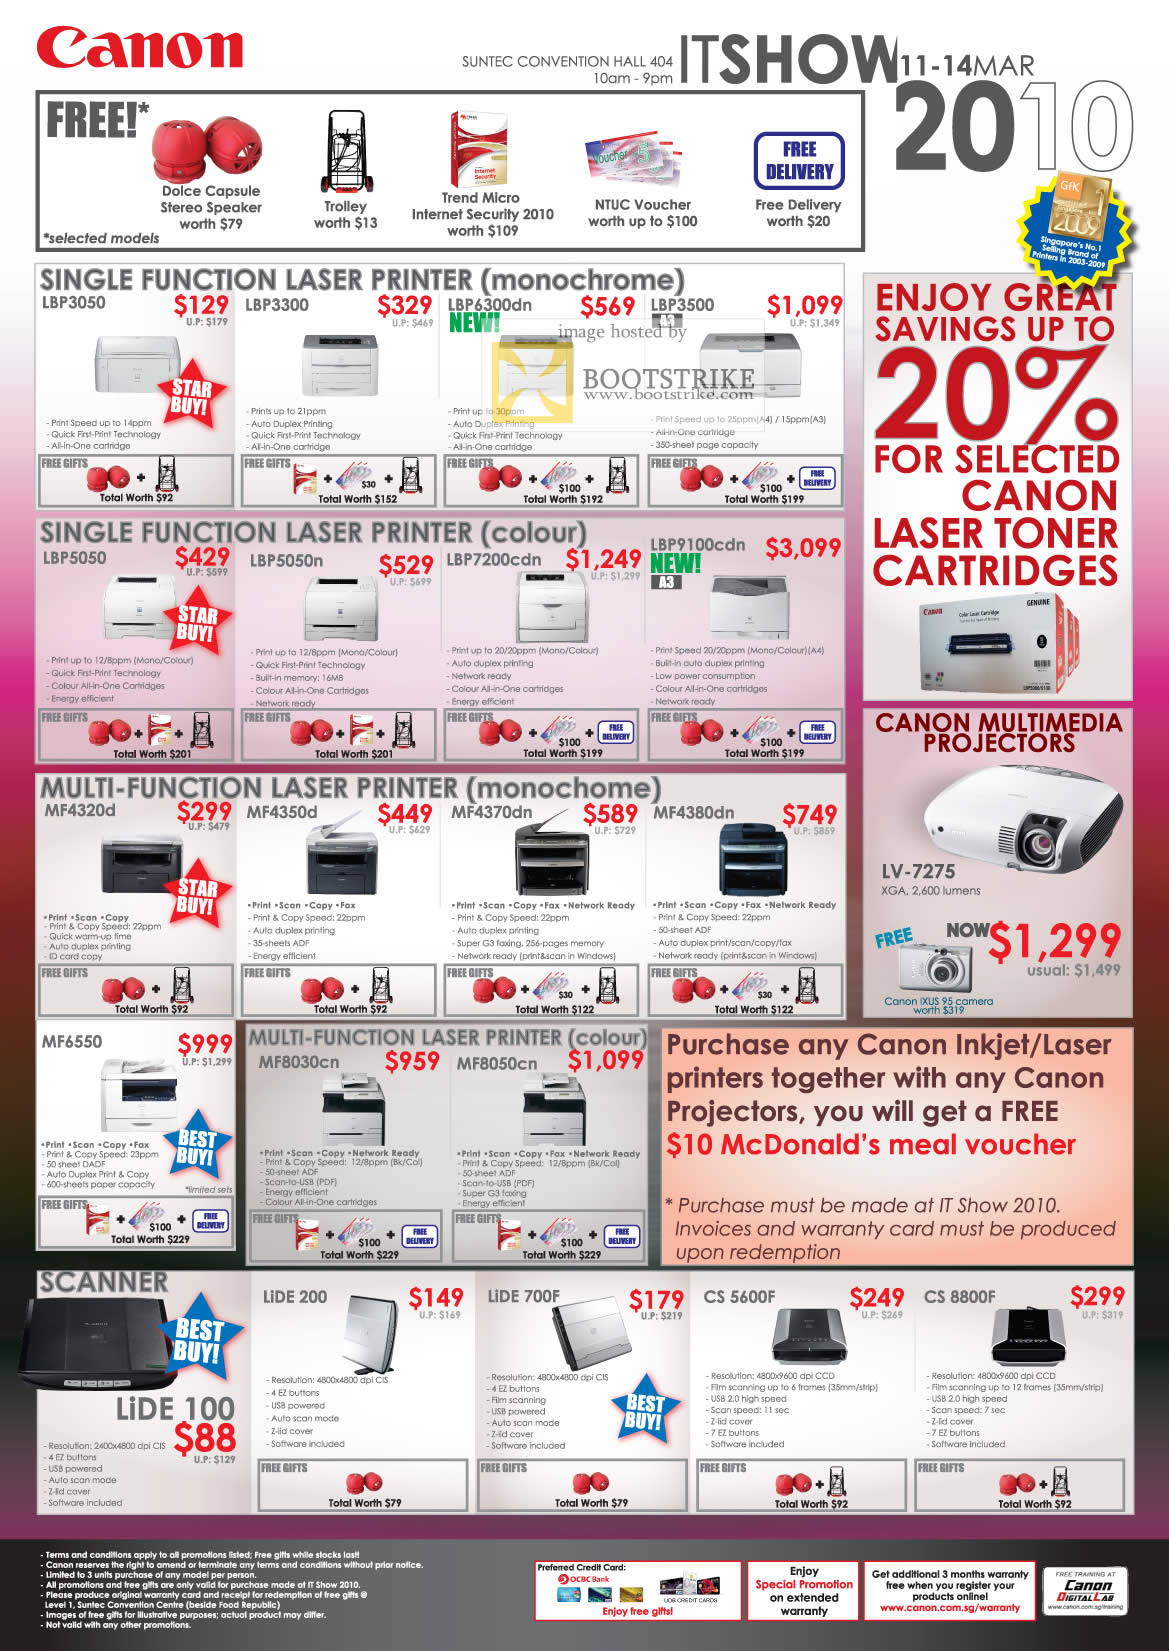 IT Show 2010 price list image brochure of Canon Laser Printers Single Multi Function Color Monochrome Projectors Scanners Lide